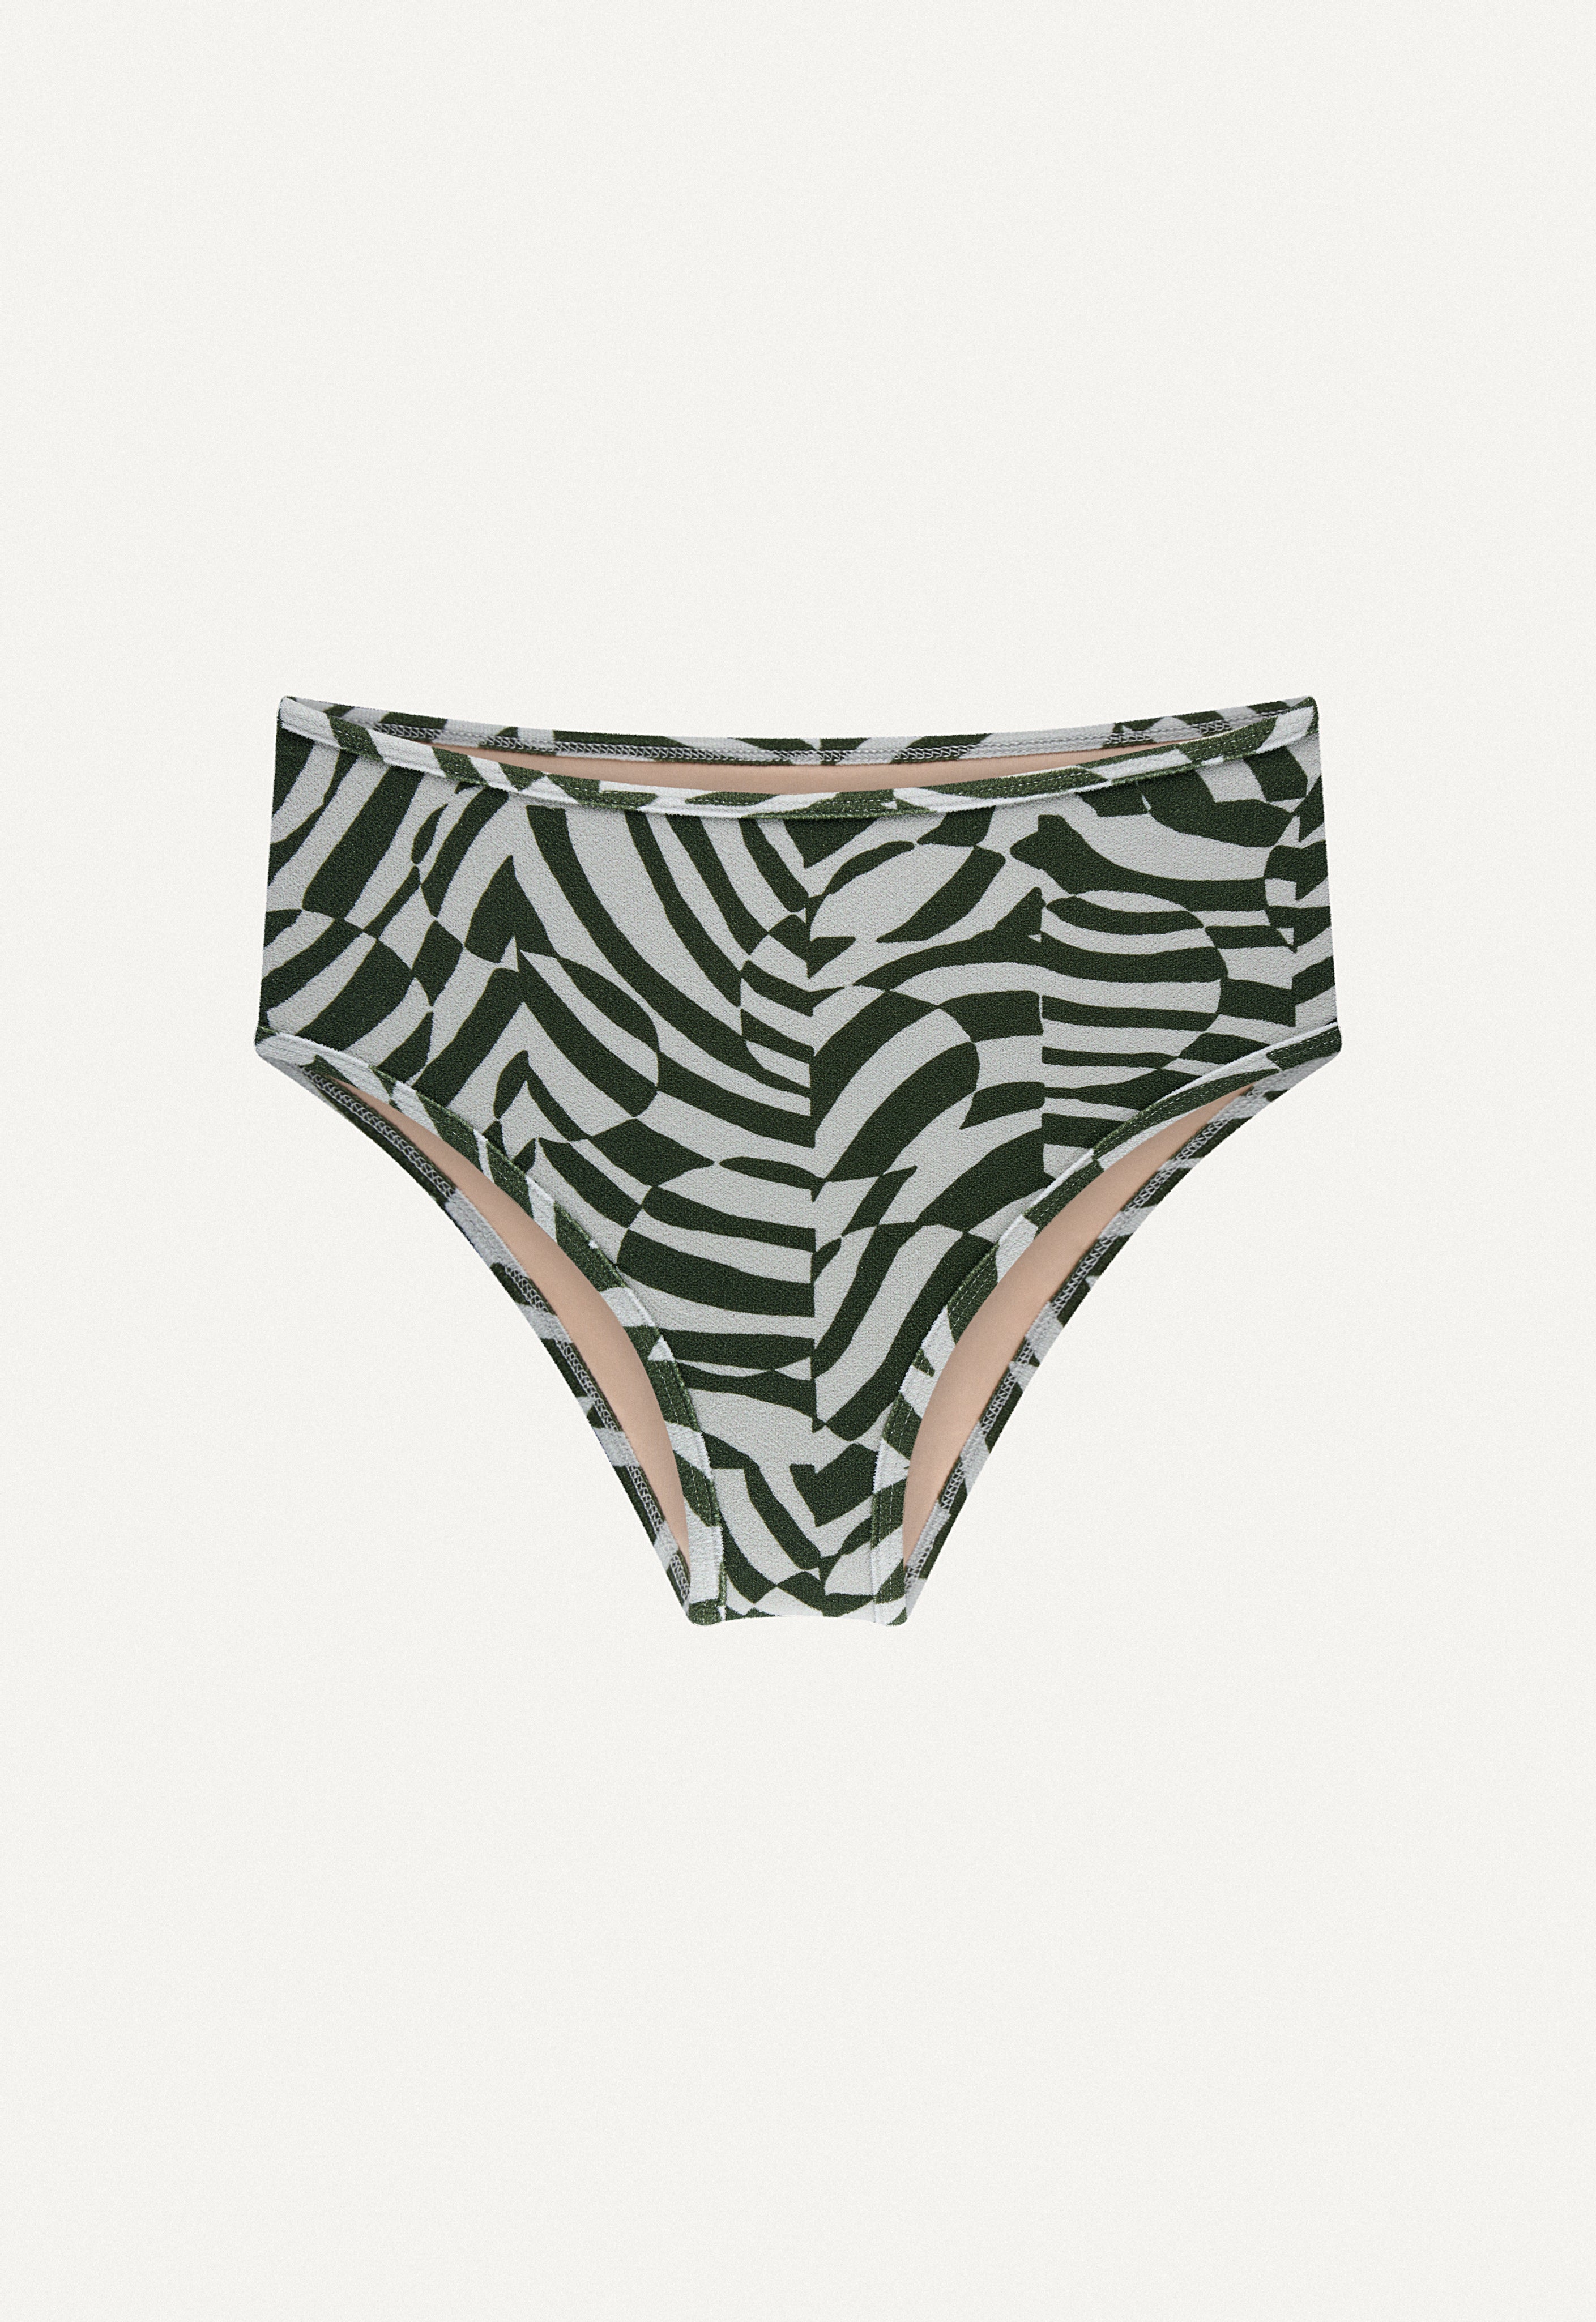 Oy-bikini-hose-A23-swimwear-Samun-zebra-print-frottee-front.jpg